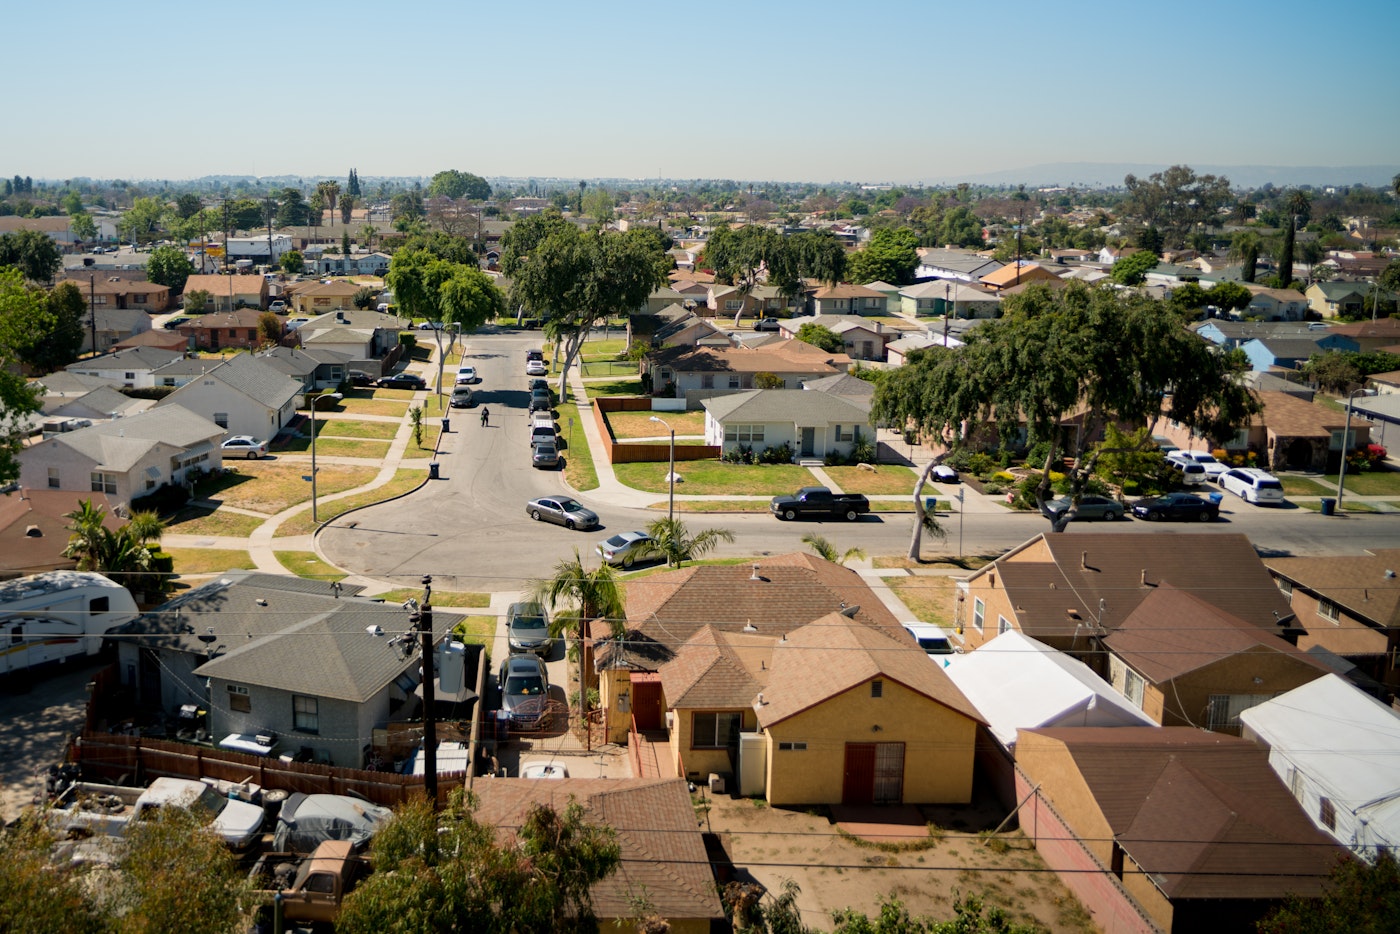 Sugar Hill in West Adams, once home to Los Angeles' Black elite